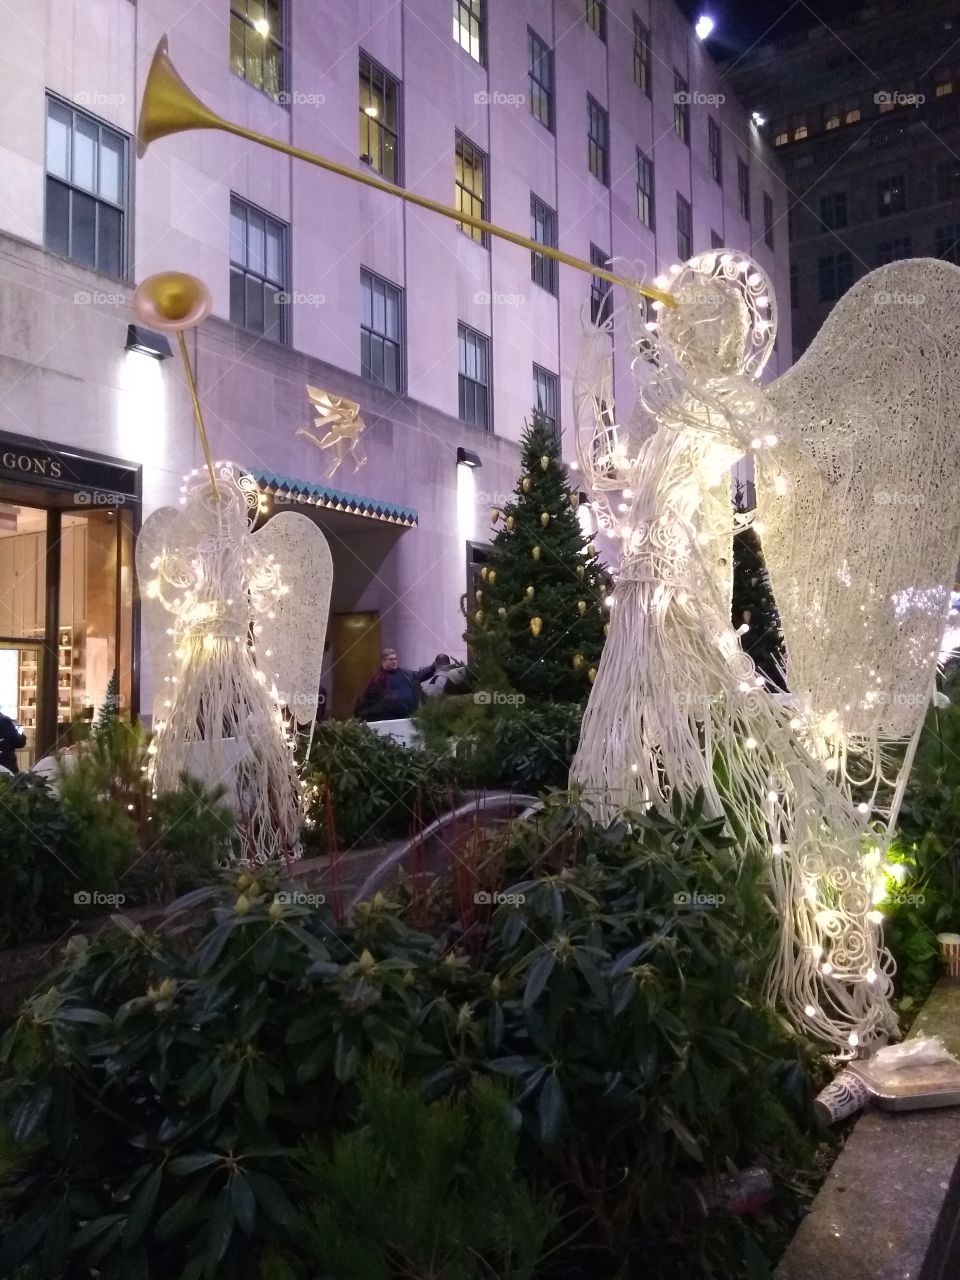 Angels at Rockefeller Center NYC